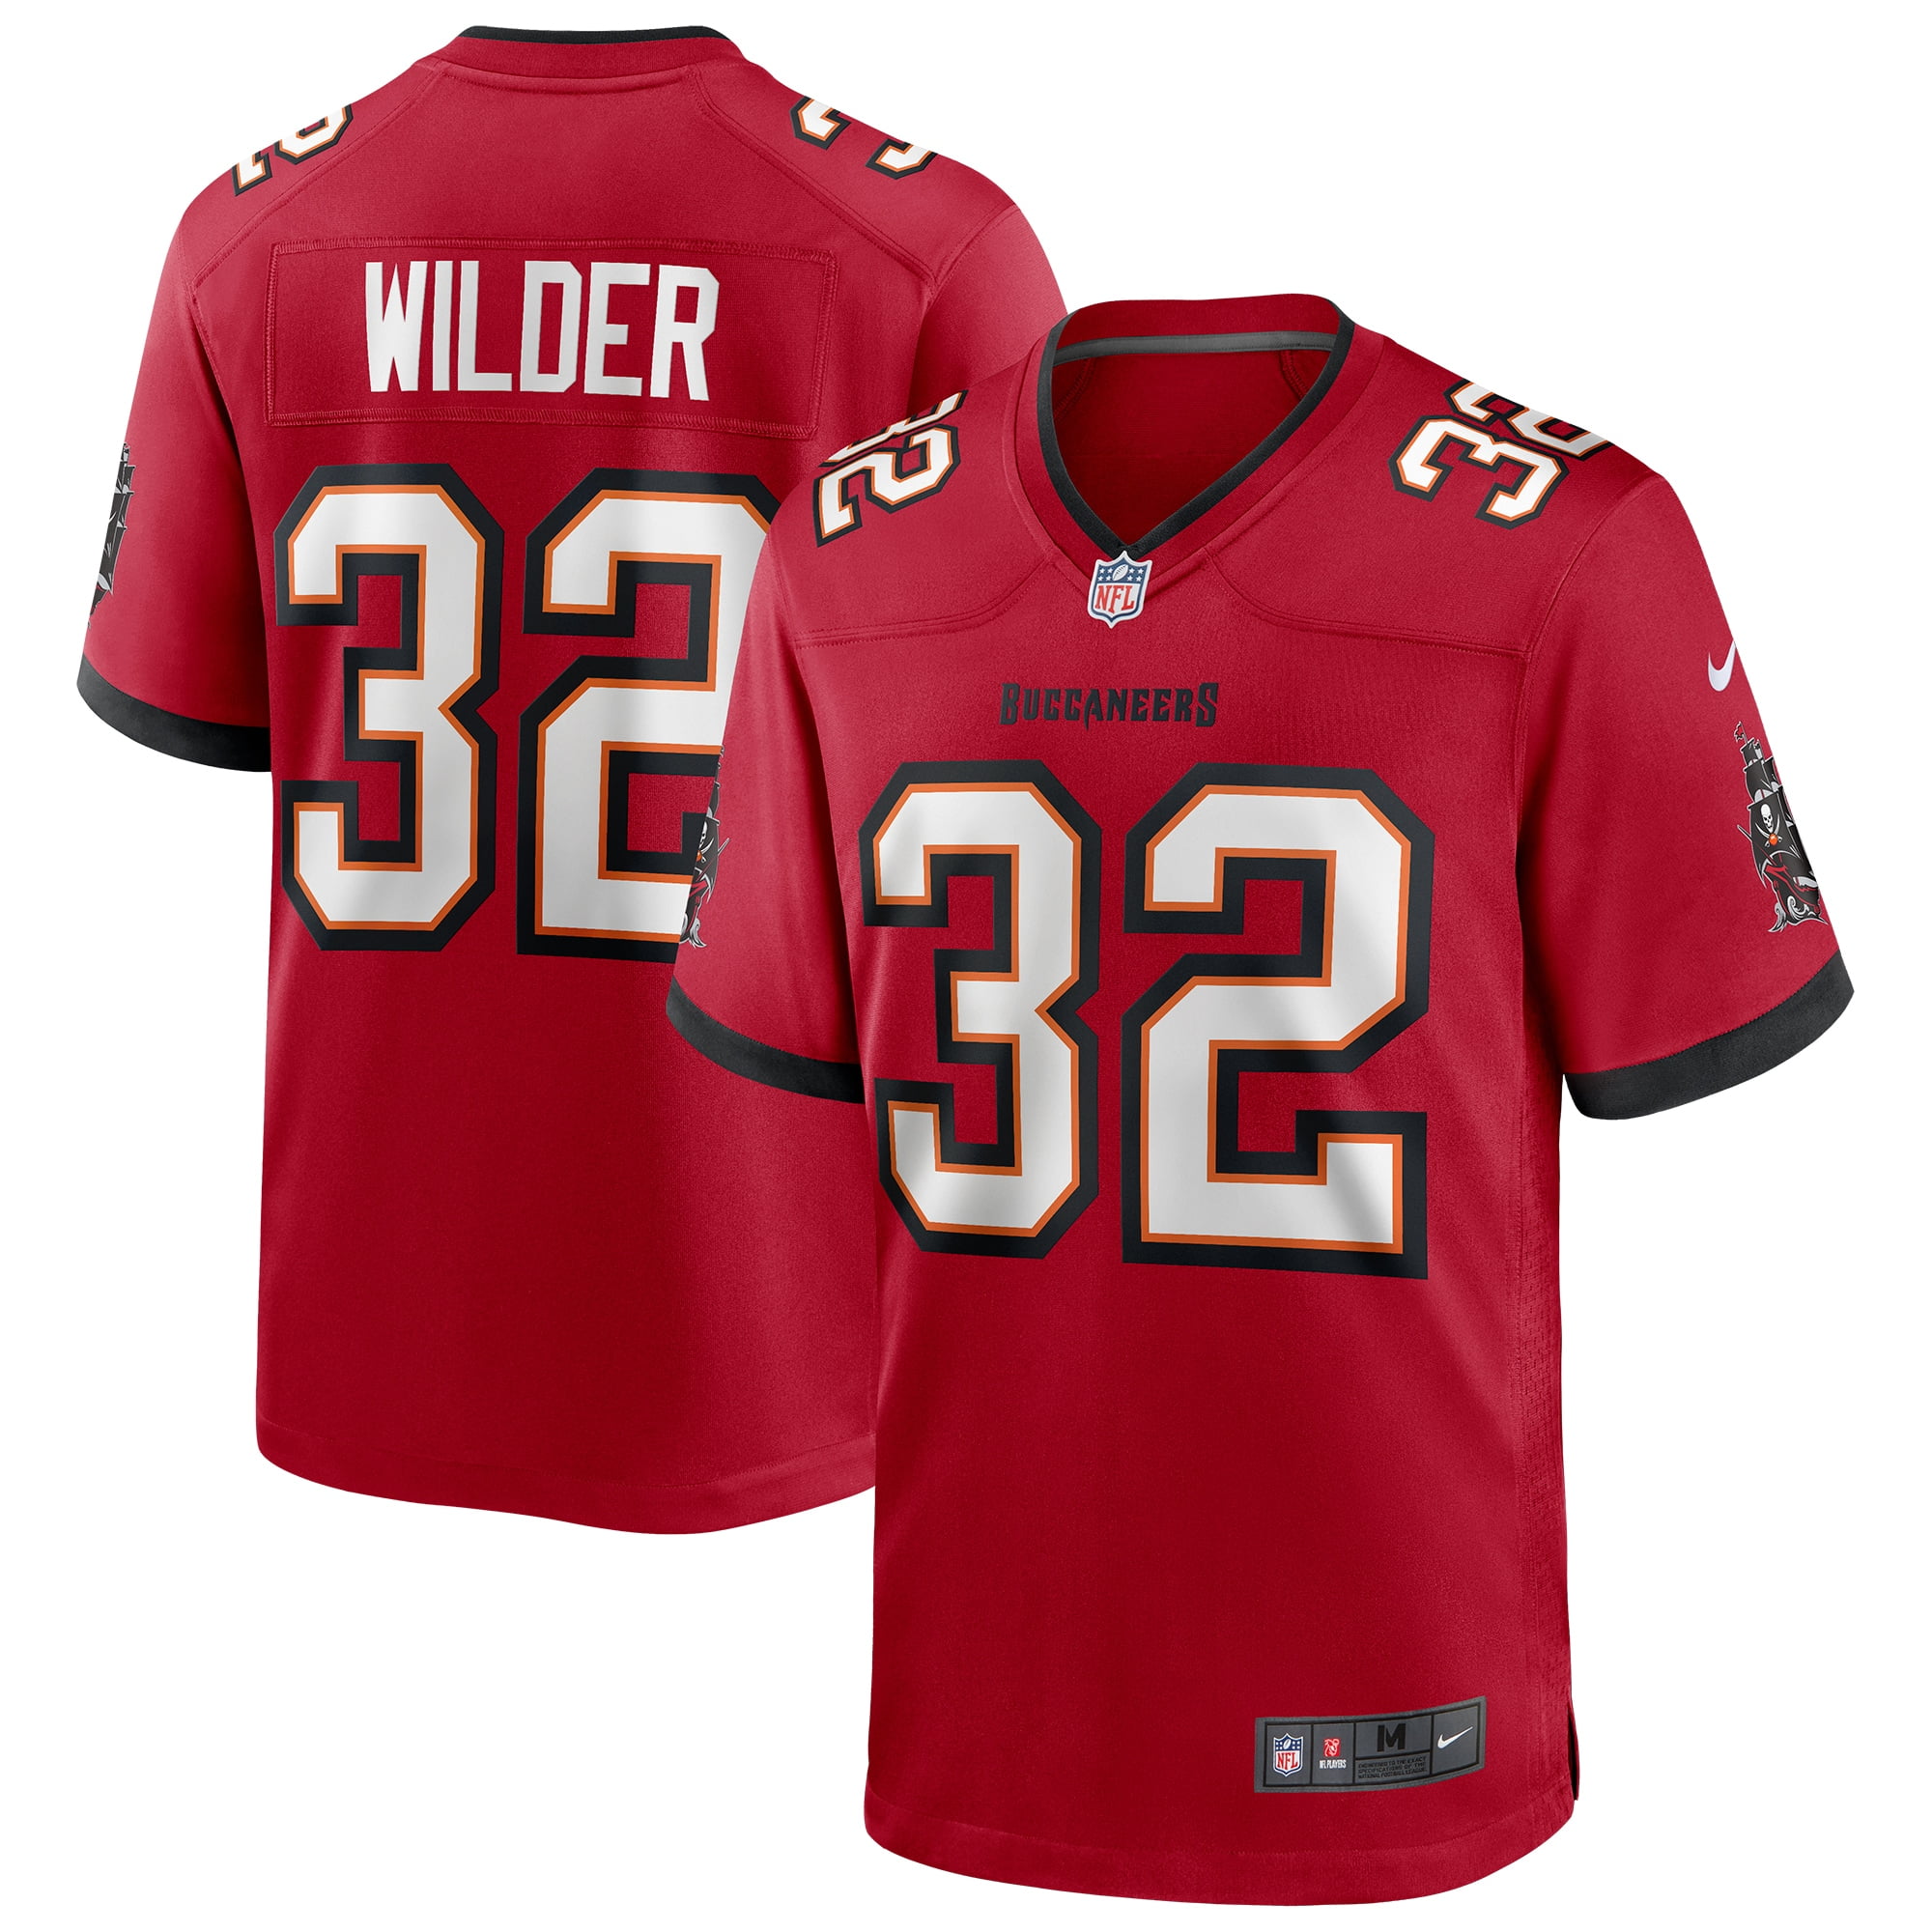 James Wilder Tampa Bay Buccaneers Nike Game Retired Player Jersey - Red - Walmart.com ...